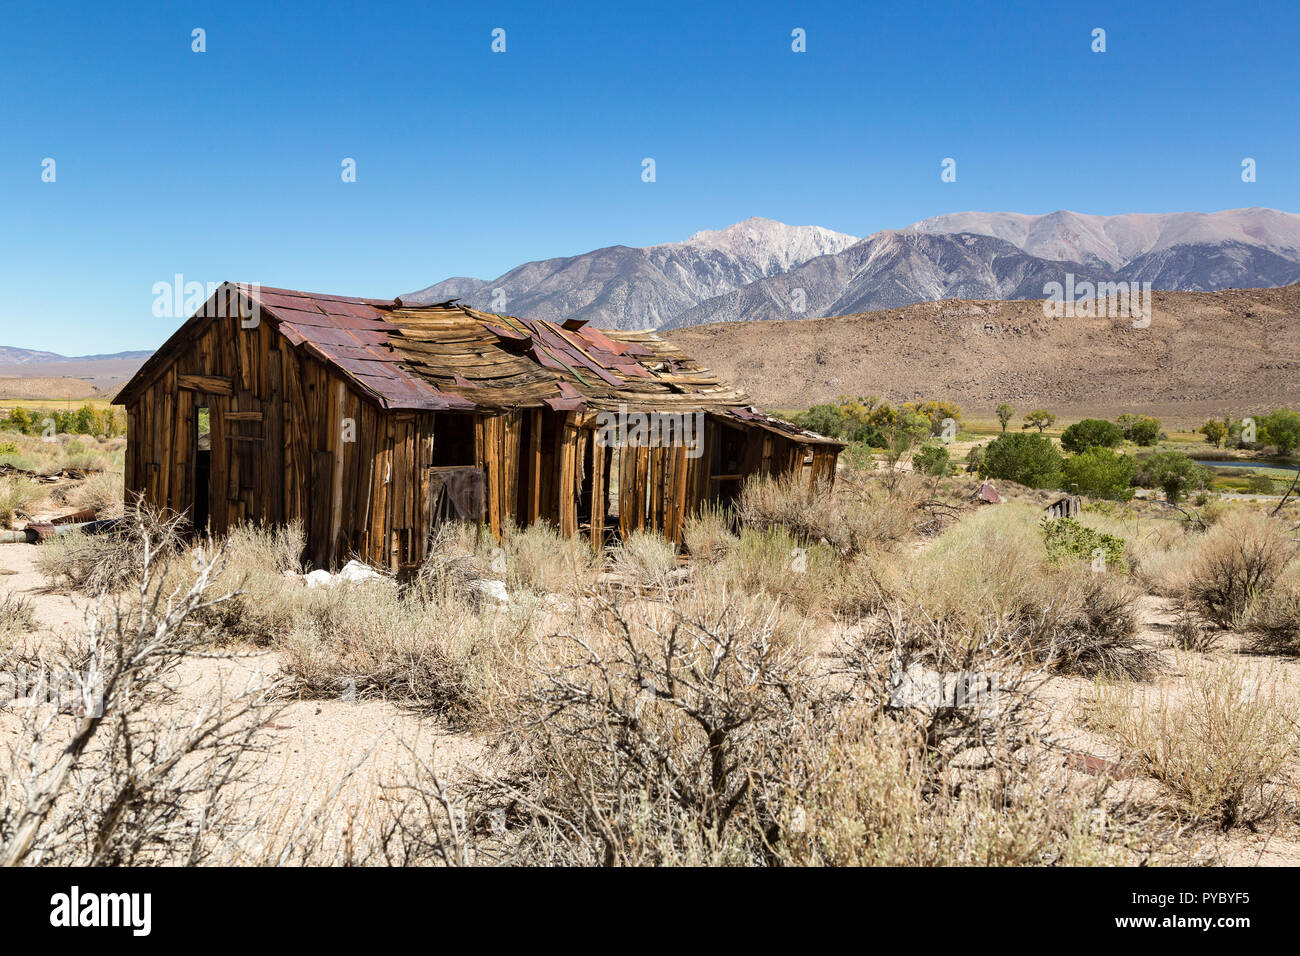 Derelict wooden house in Benton Springs, California, USA. Deserted mining town near Nevada state border. Stock Photo